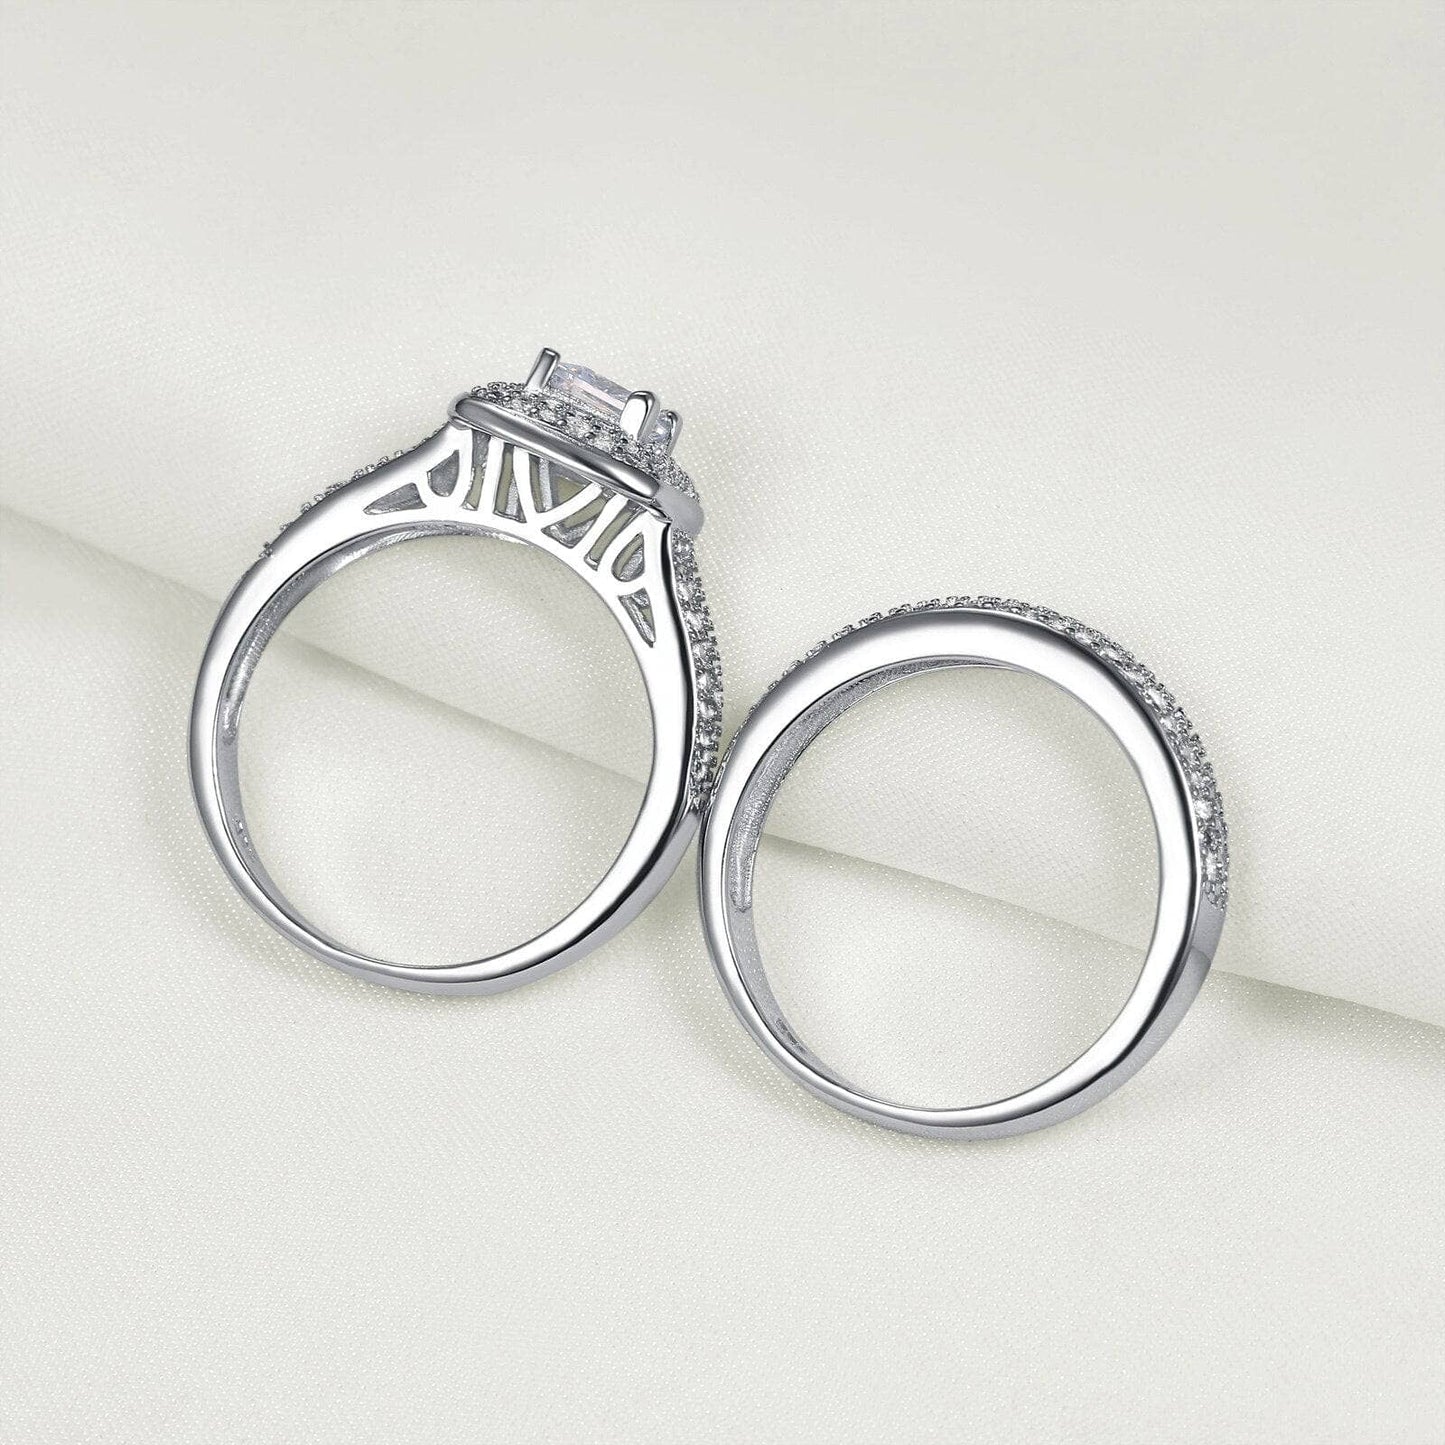 2.26 Ct Princess Cut EVN Stone Engagement Ring Bridal Set-Black Diamonds New York